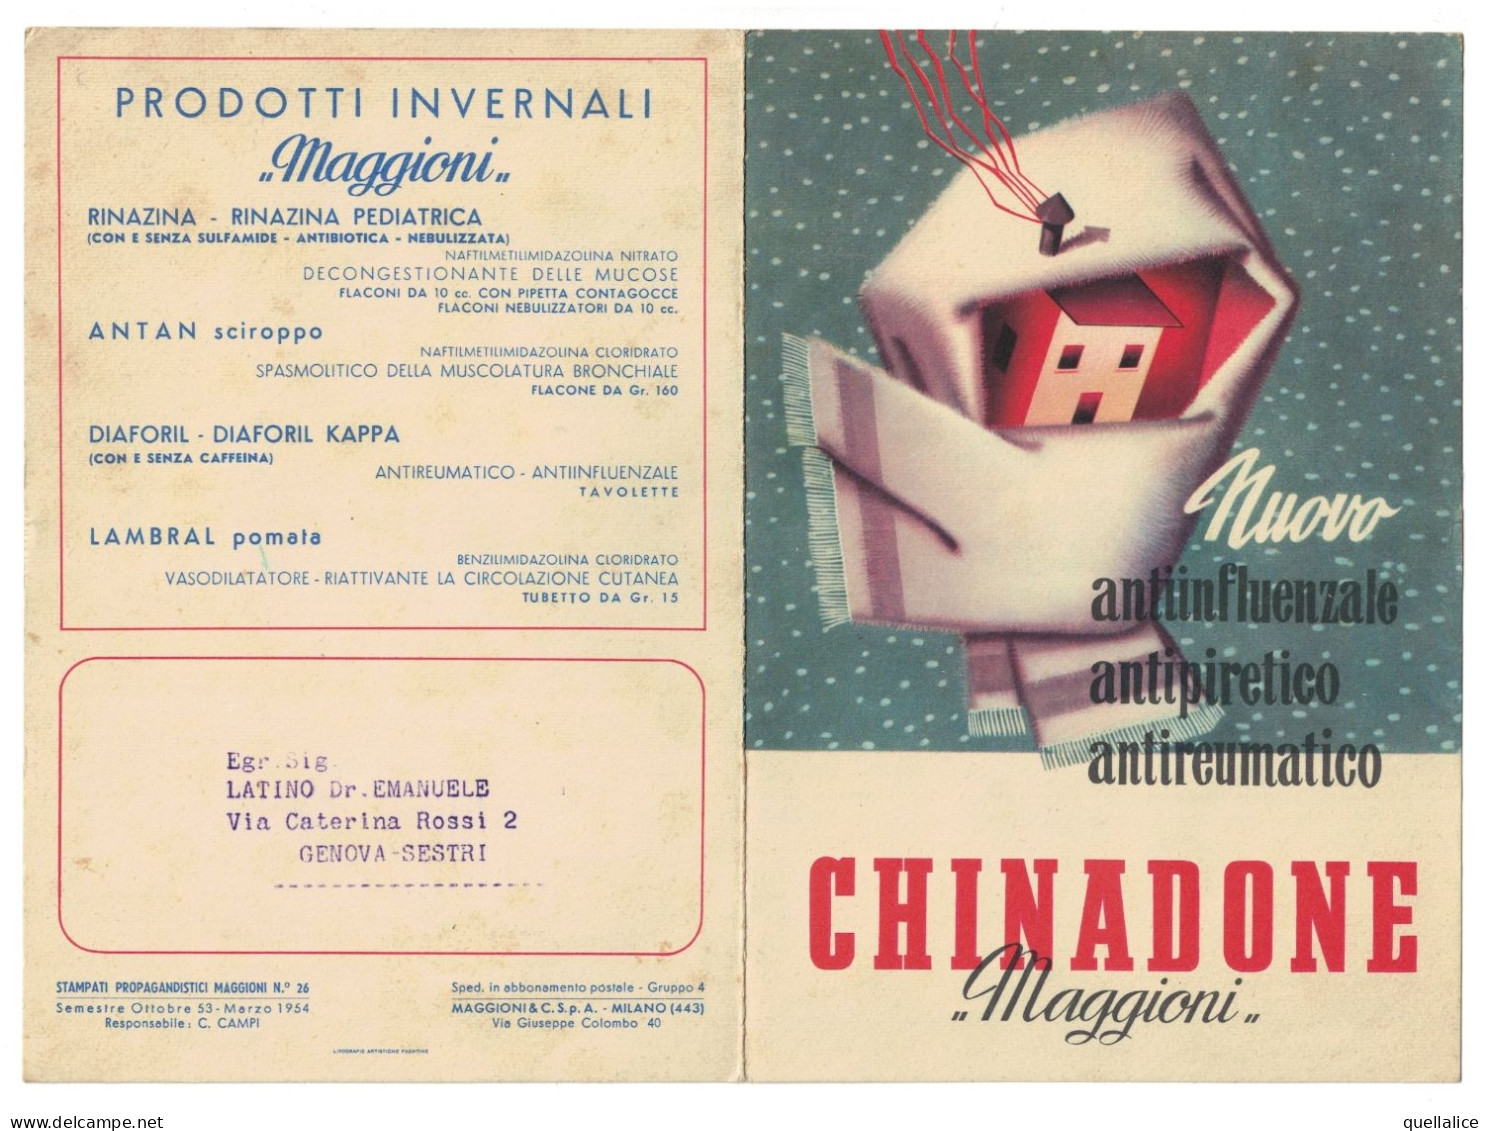 03916 "CHINADONE - MAGGIONI & C. S.PA. - NUOVO ANTIINFLUENZALE, ANTIPIRETICO, ANTIREUMATICO" PUBBL. 1954 - Advertising